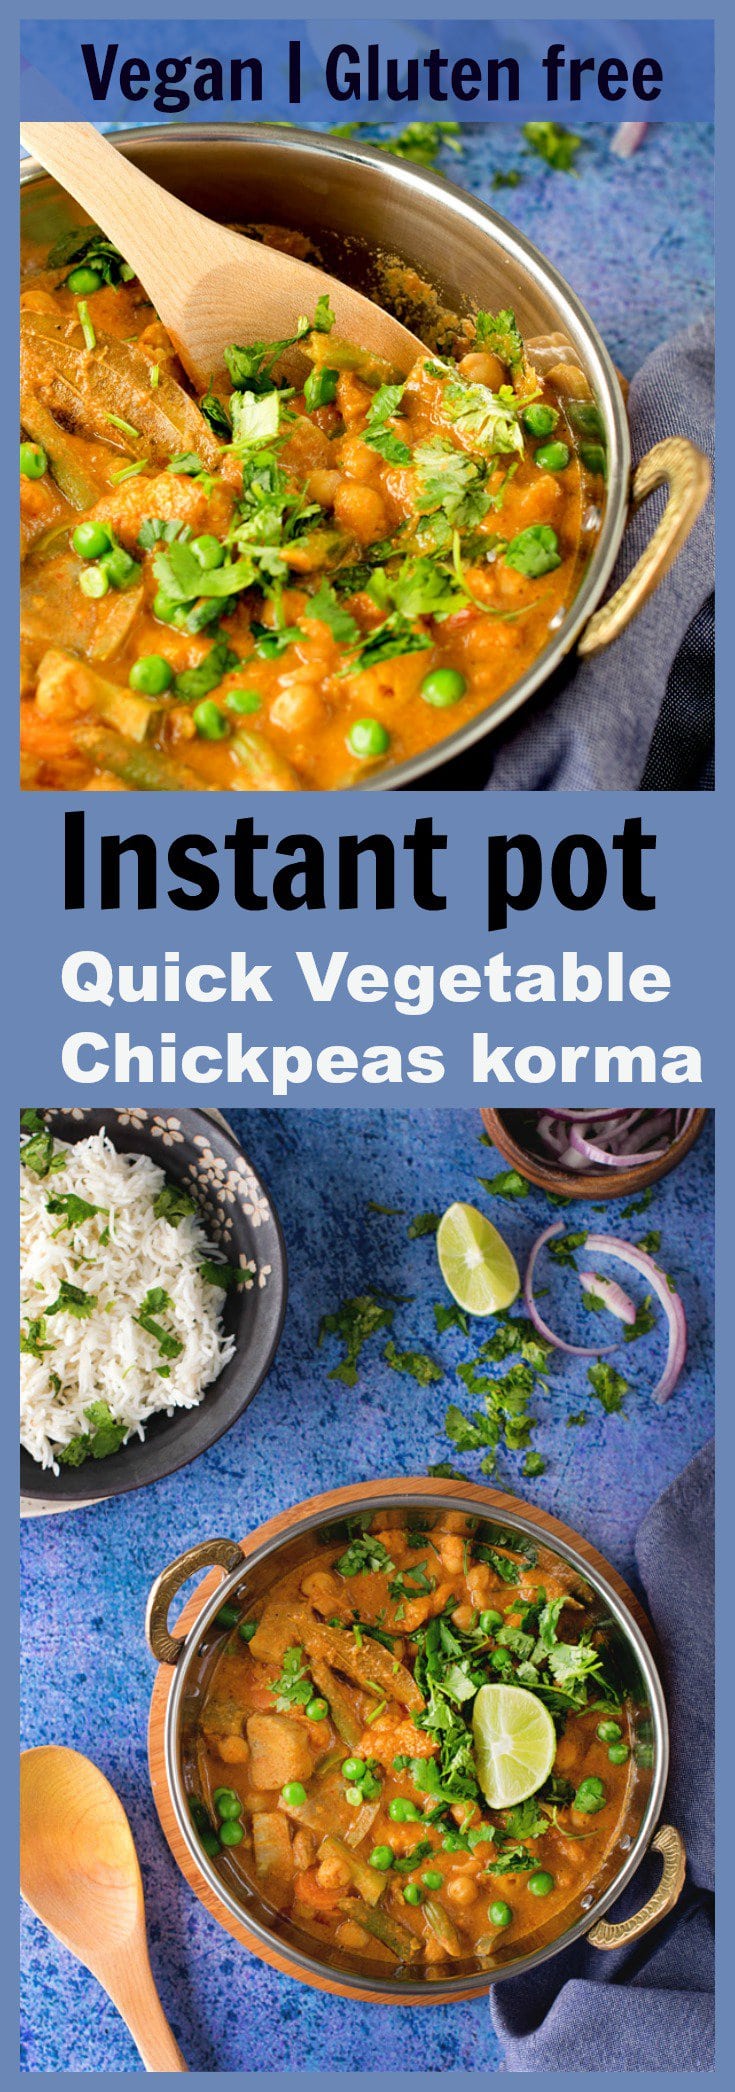 vegetable chickpeas curry korma vegan